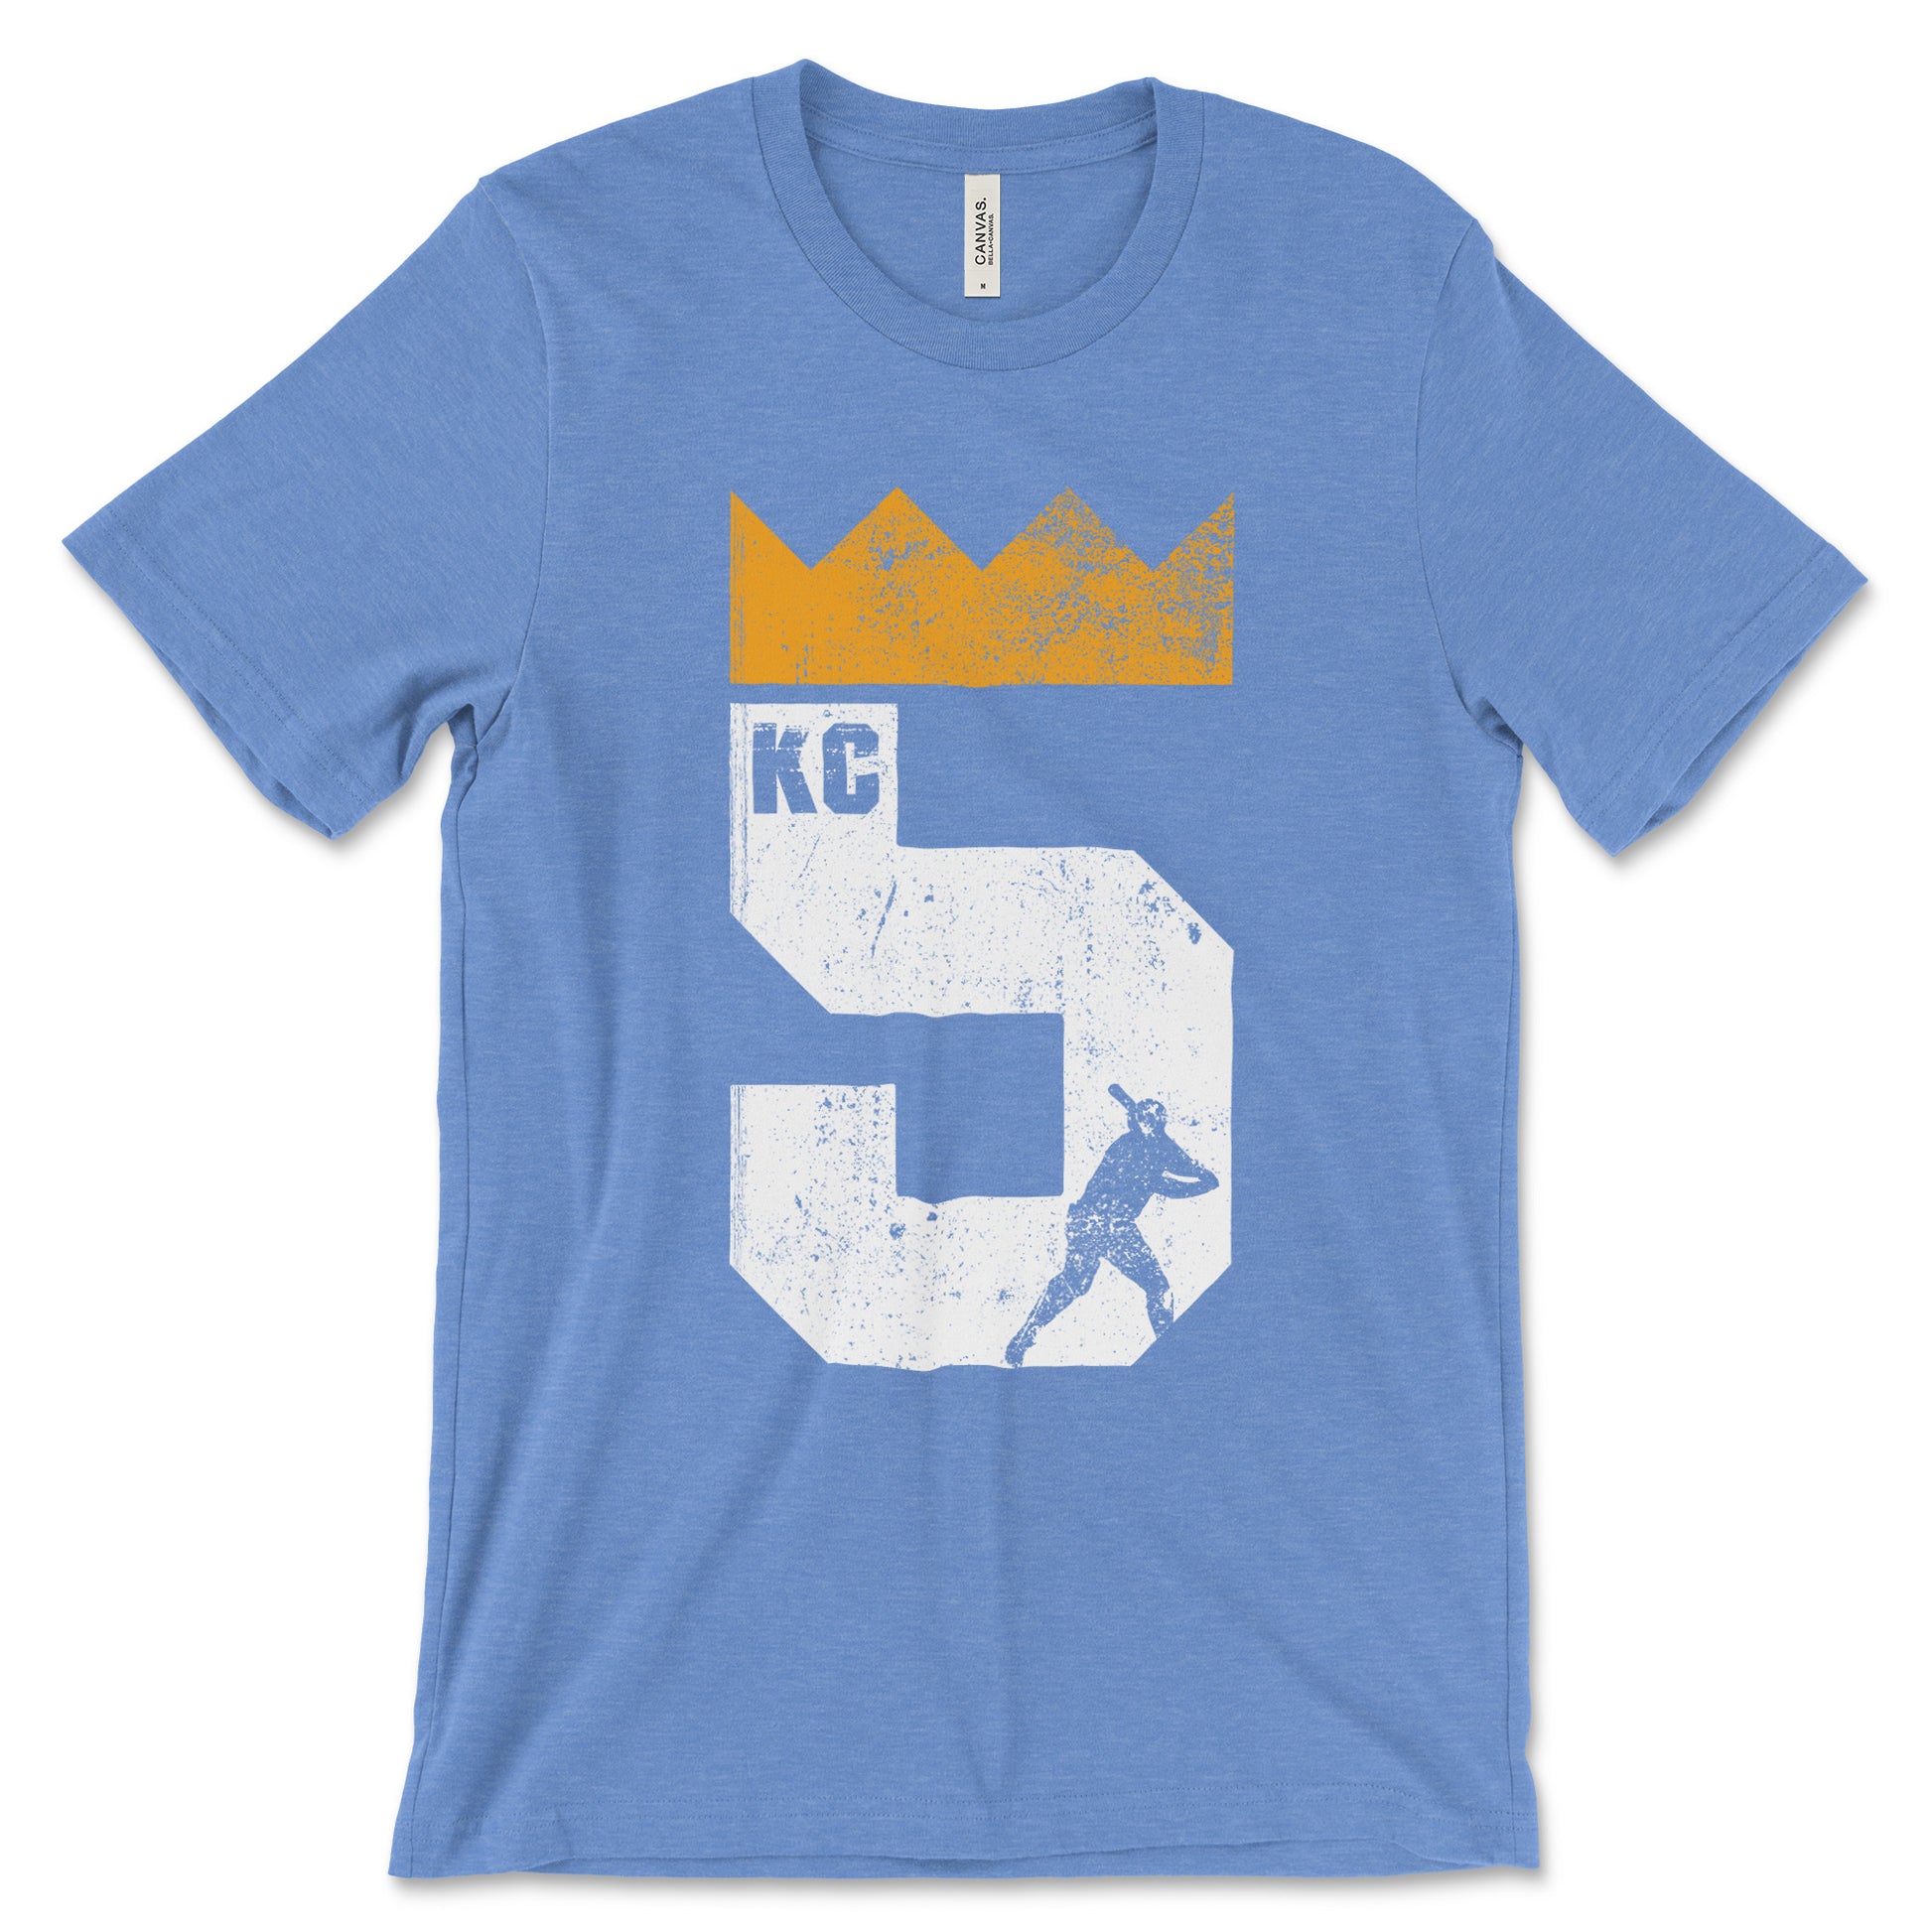 KC Swag - Kansas City Royals, Brett Five Crown design on heather columbia blue unisex t-shirt 